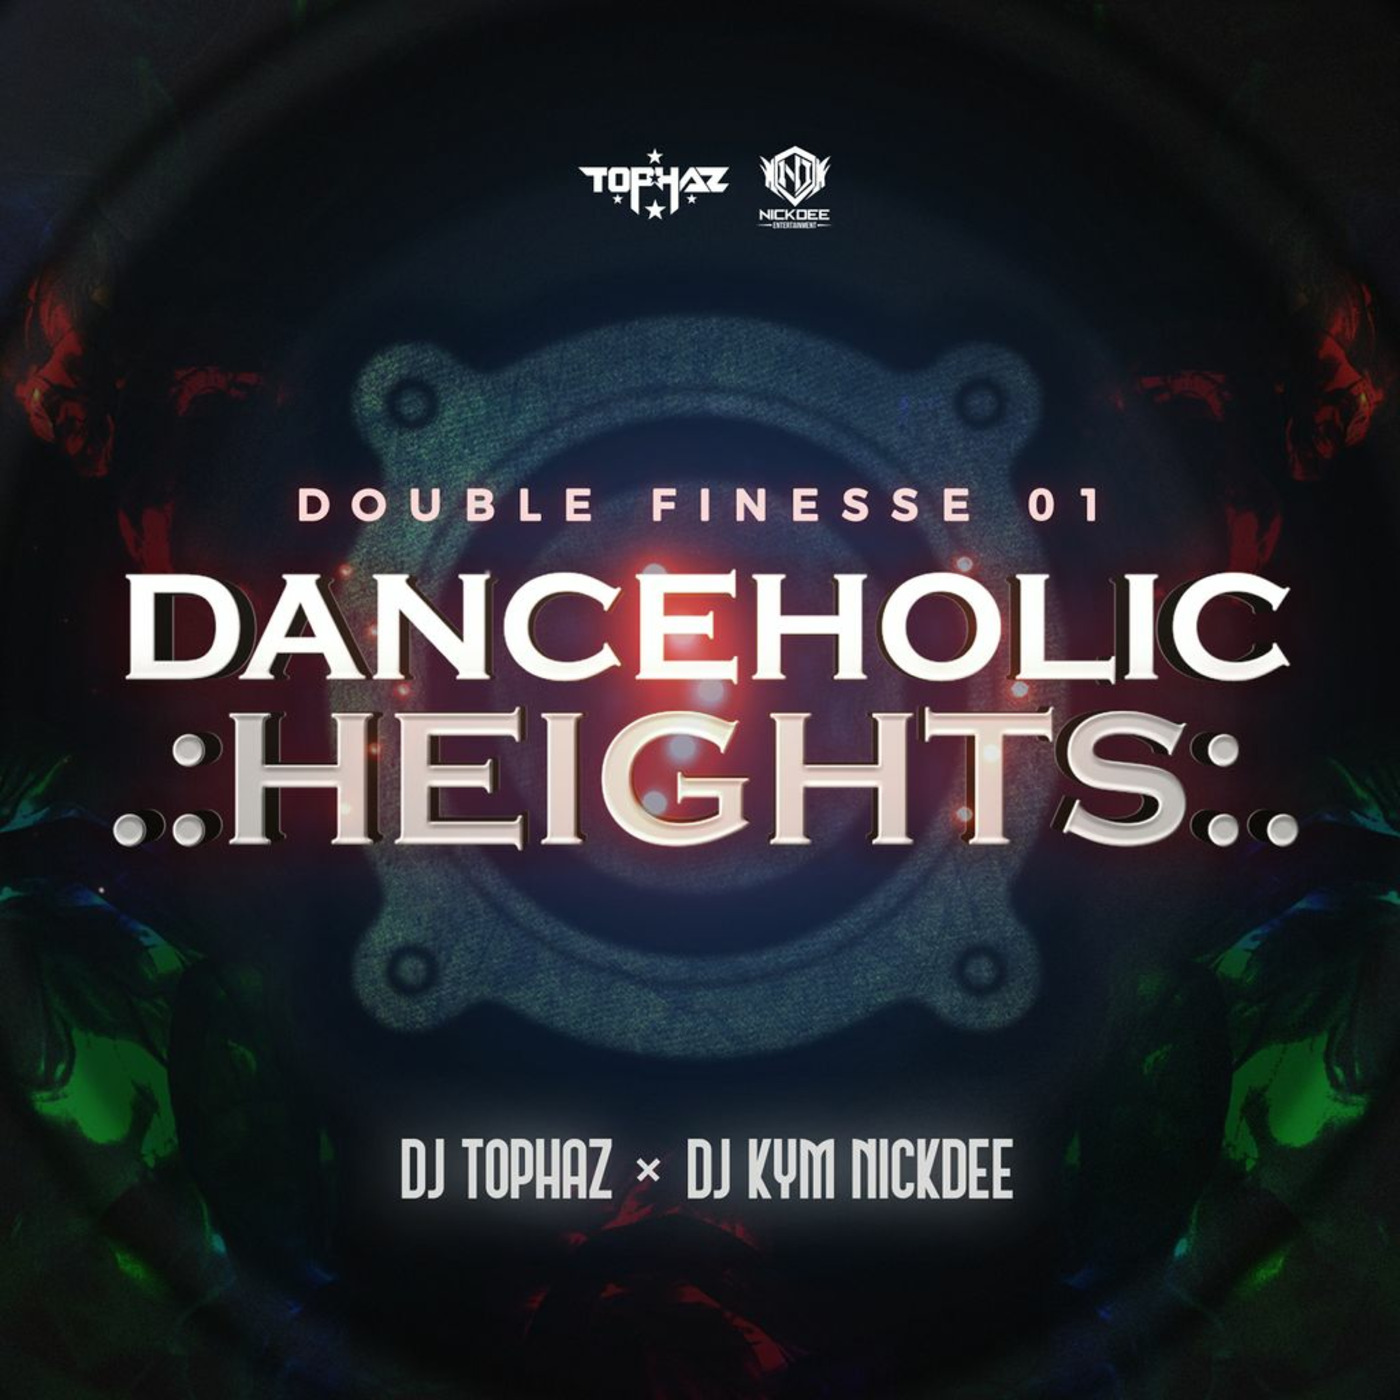 DJ TOPHAZ x DJ KYM NICKDEE - DOUBLE FINESSE 01 [DANCEHOLIC HEIGHTS]